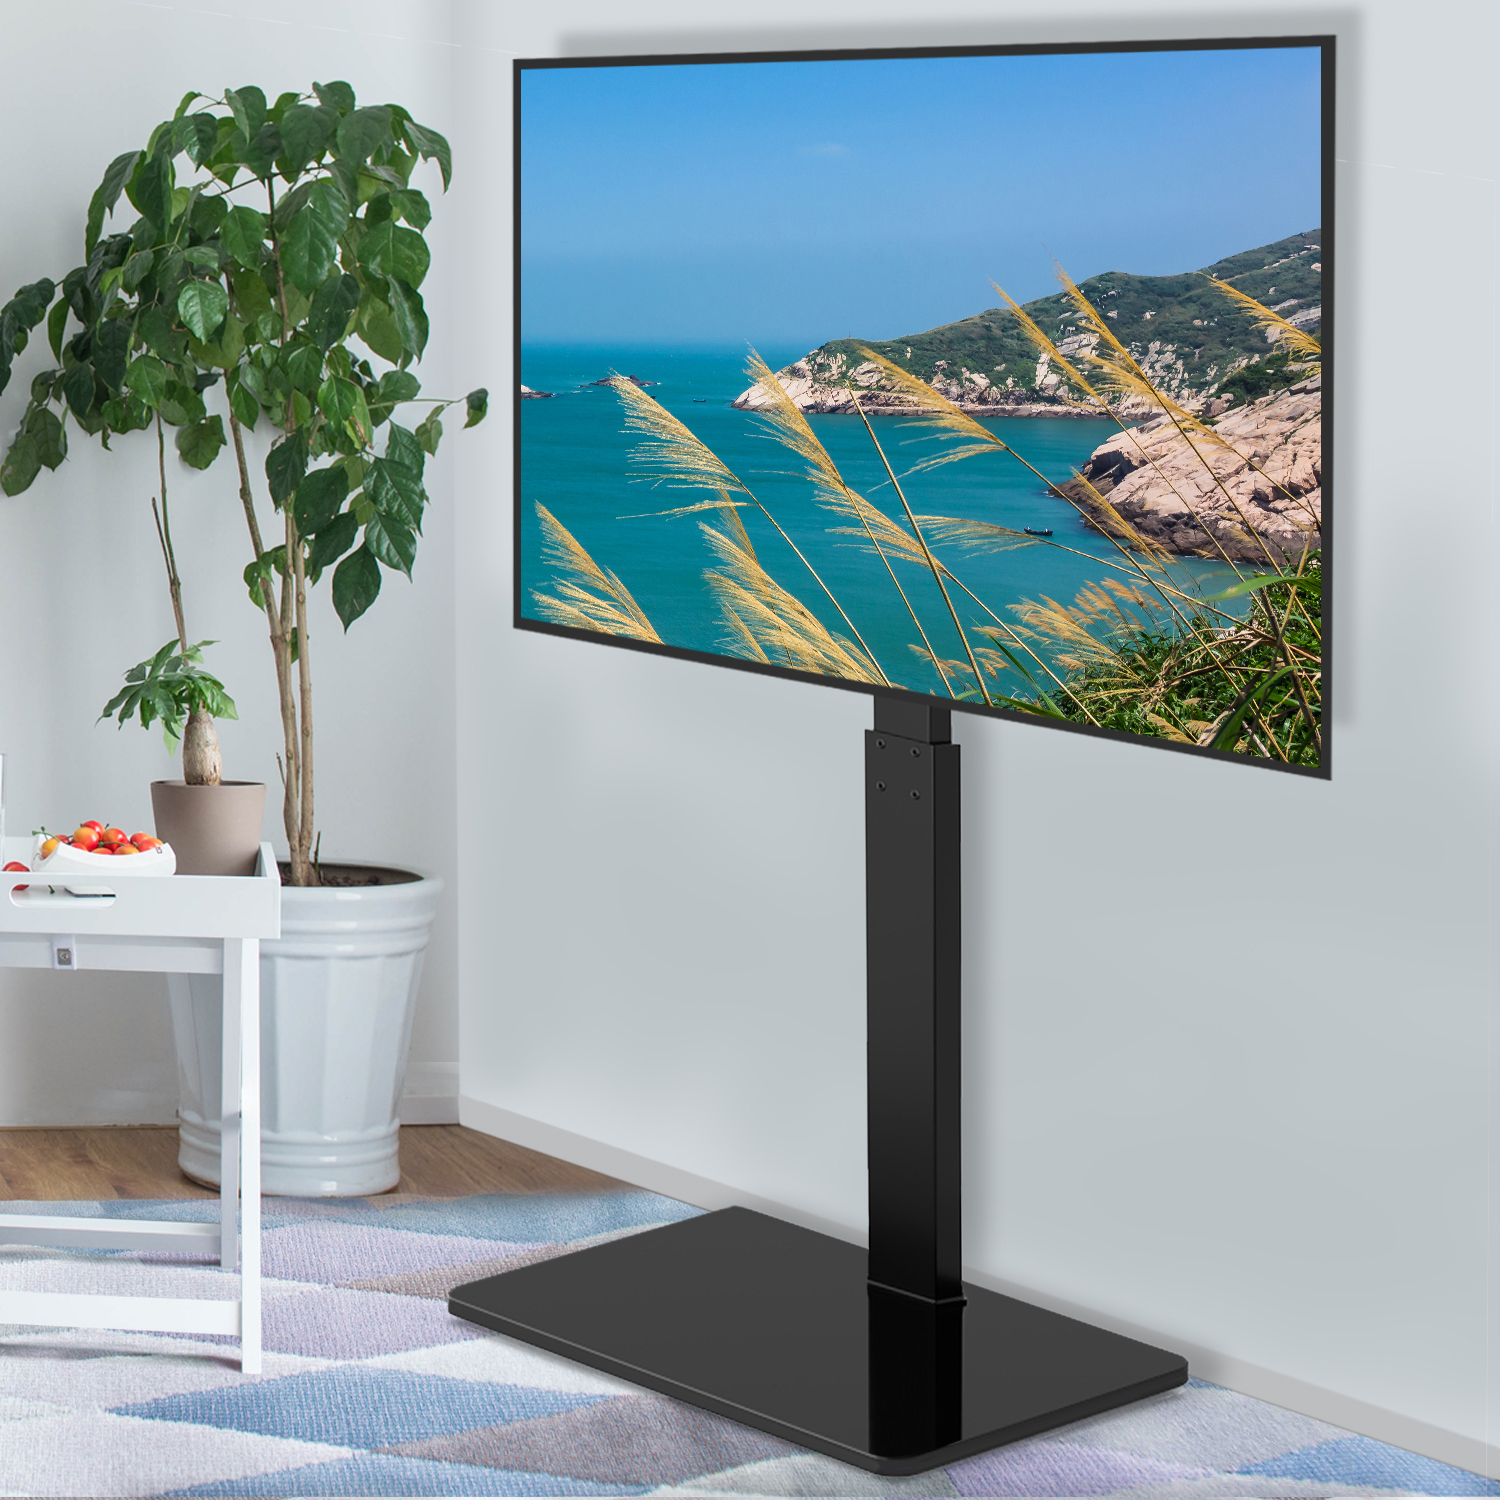 TAVR Modern Swivel Floor TV Stand Base for TVs up to 70 inch Black TV Mount - image 1 of 7